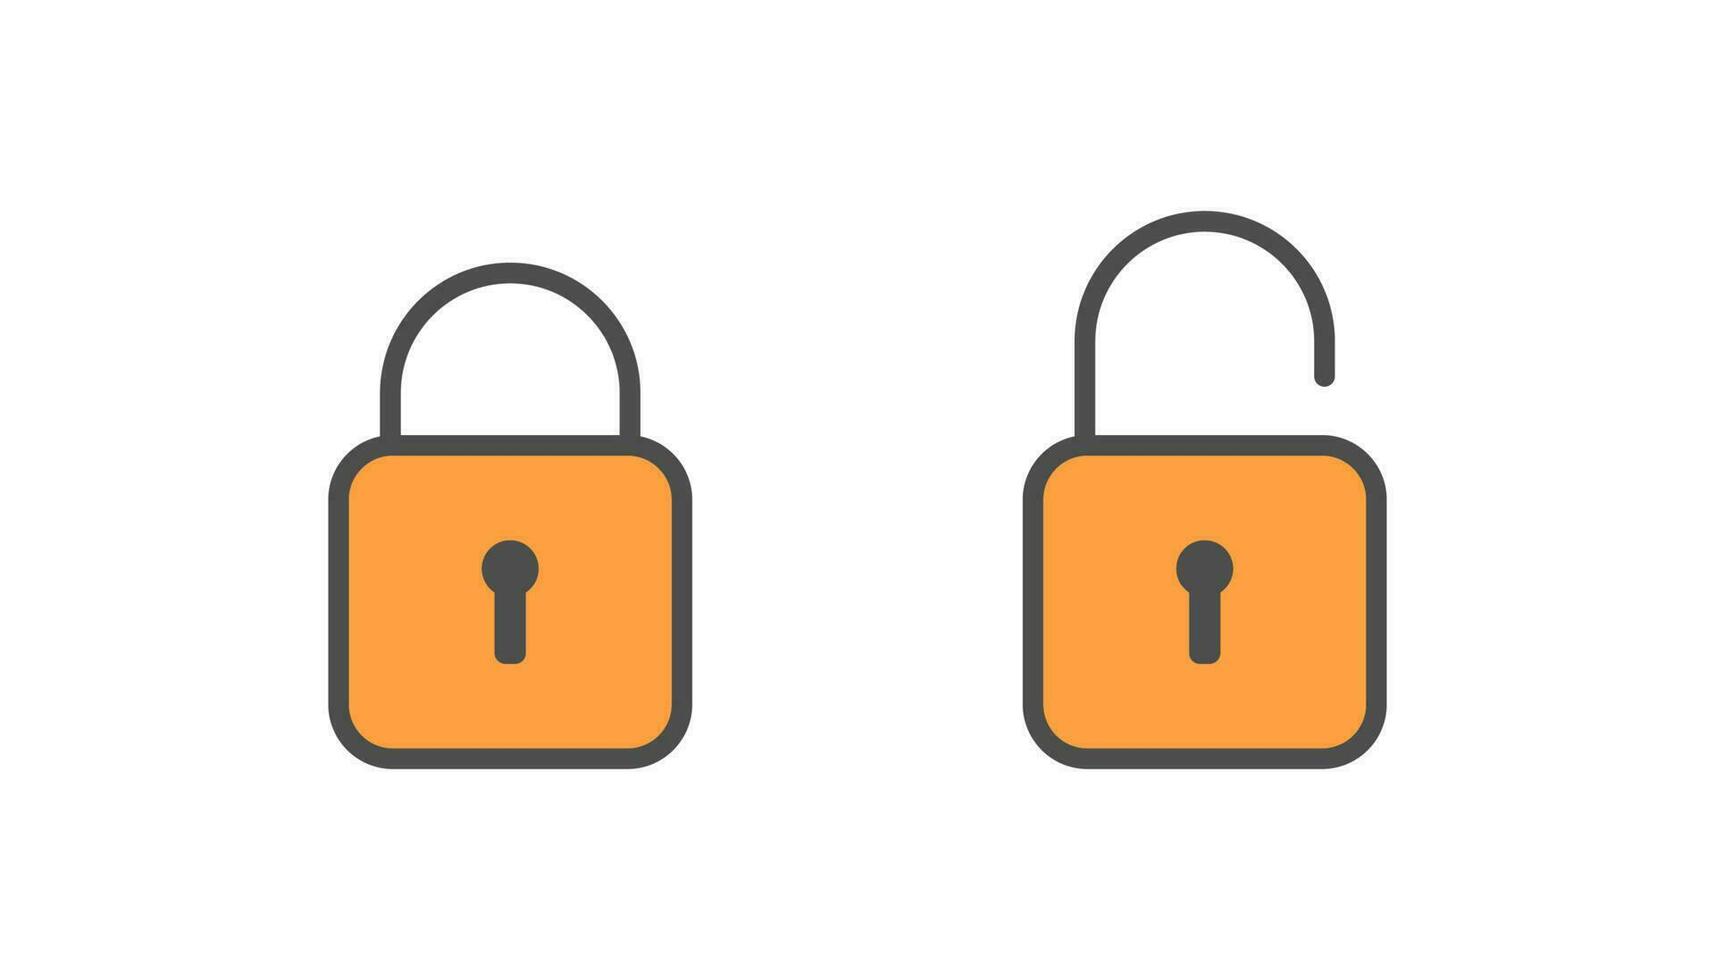 Padlock icon, lock and unlock icon vector design